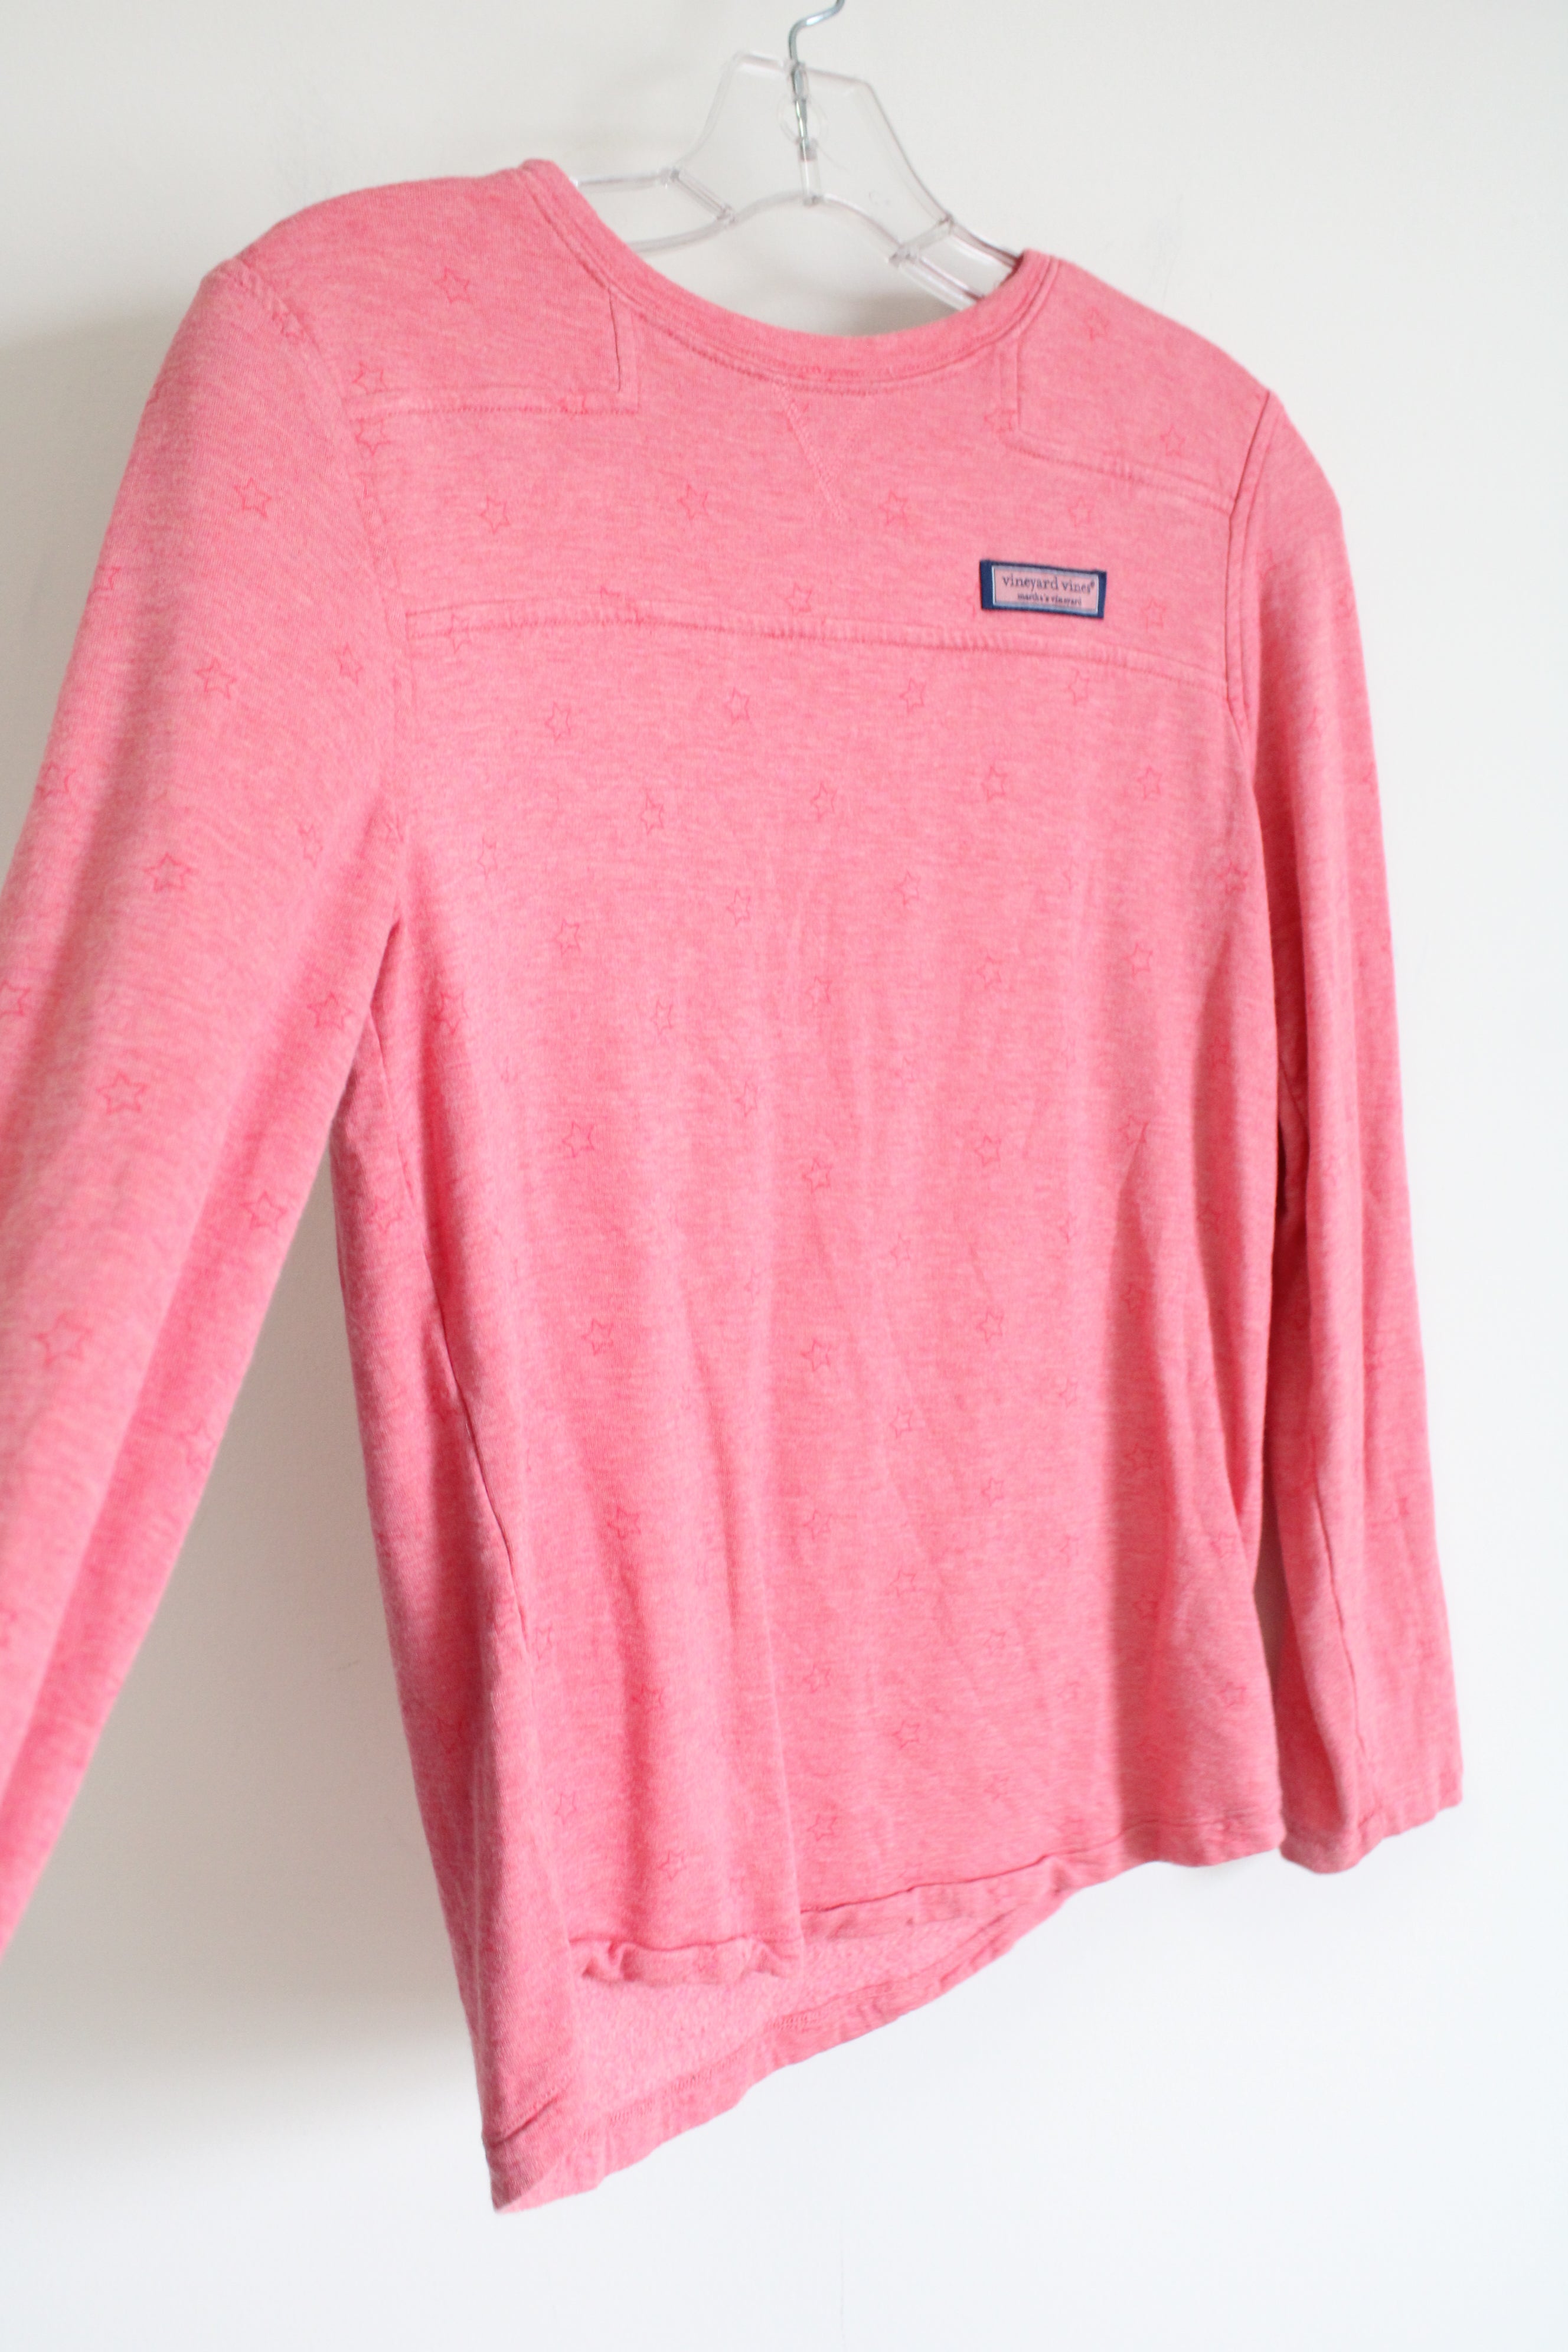 Vineyard Vines Pink Long Sleeved Shirt | Youth L (14)